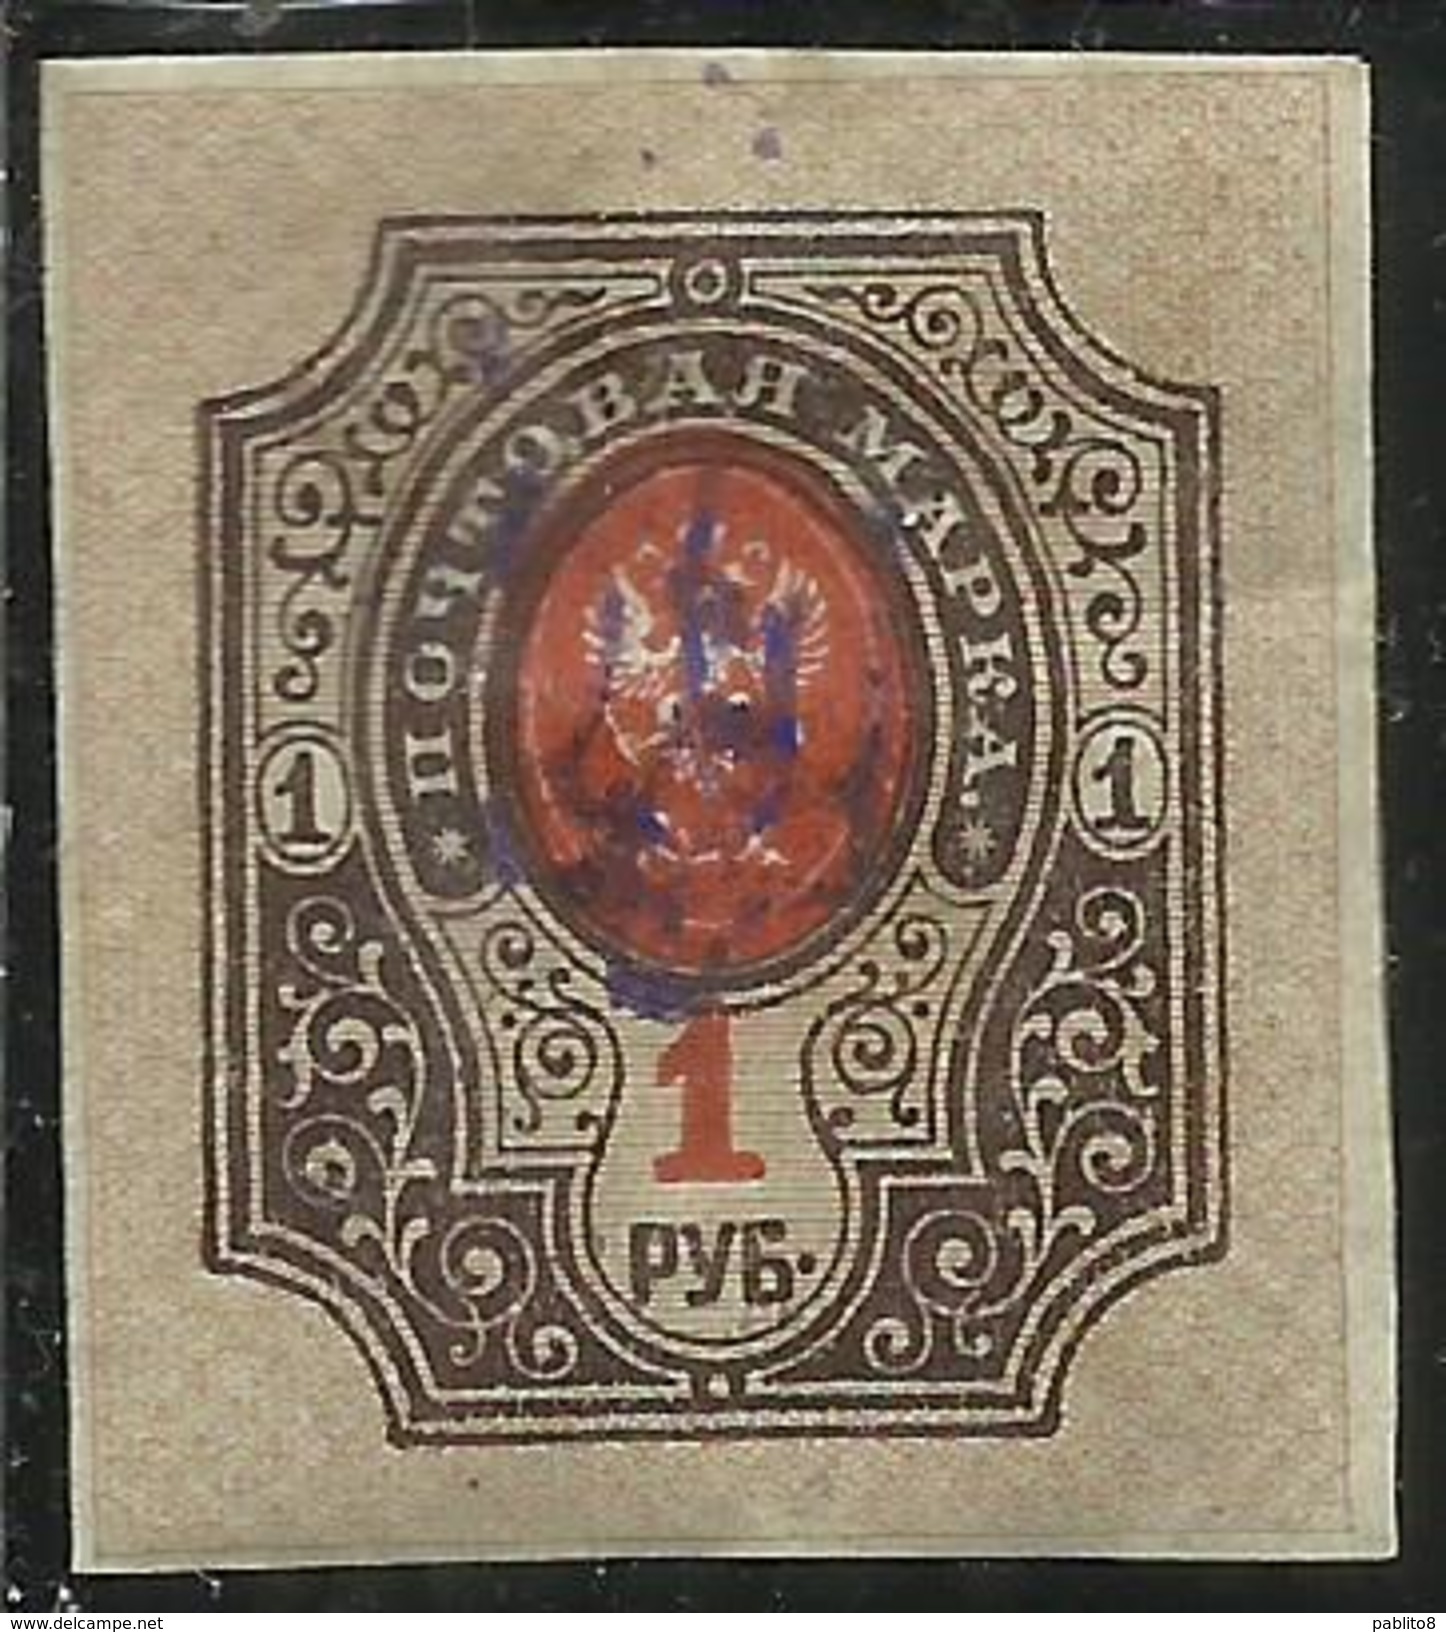 RUSSIA URSS RUSSIE 1889 STEMMA COAT OF ARMS ARMOIRIES 1r 1 R CORNO DI POSTA HORN OF MAIL IMPERF. NON DENTELLATO MLH - Unused Stamps